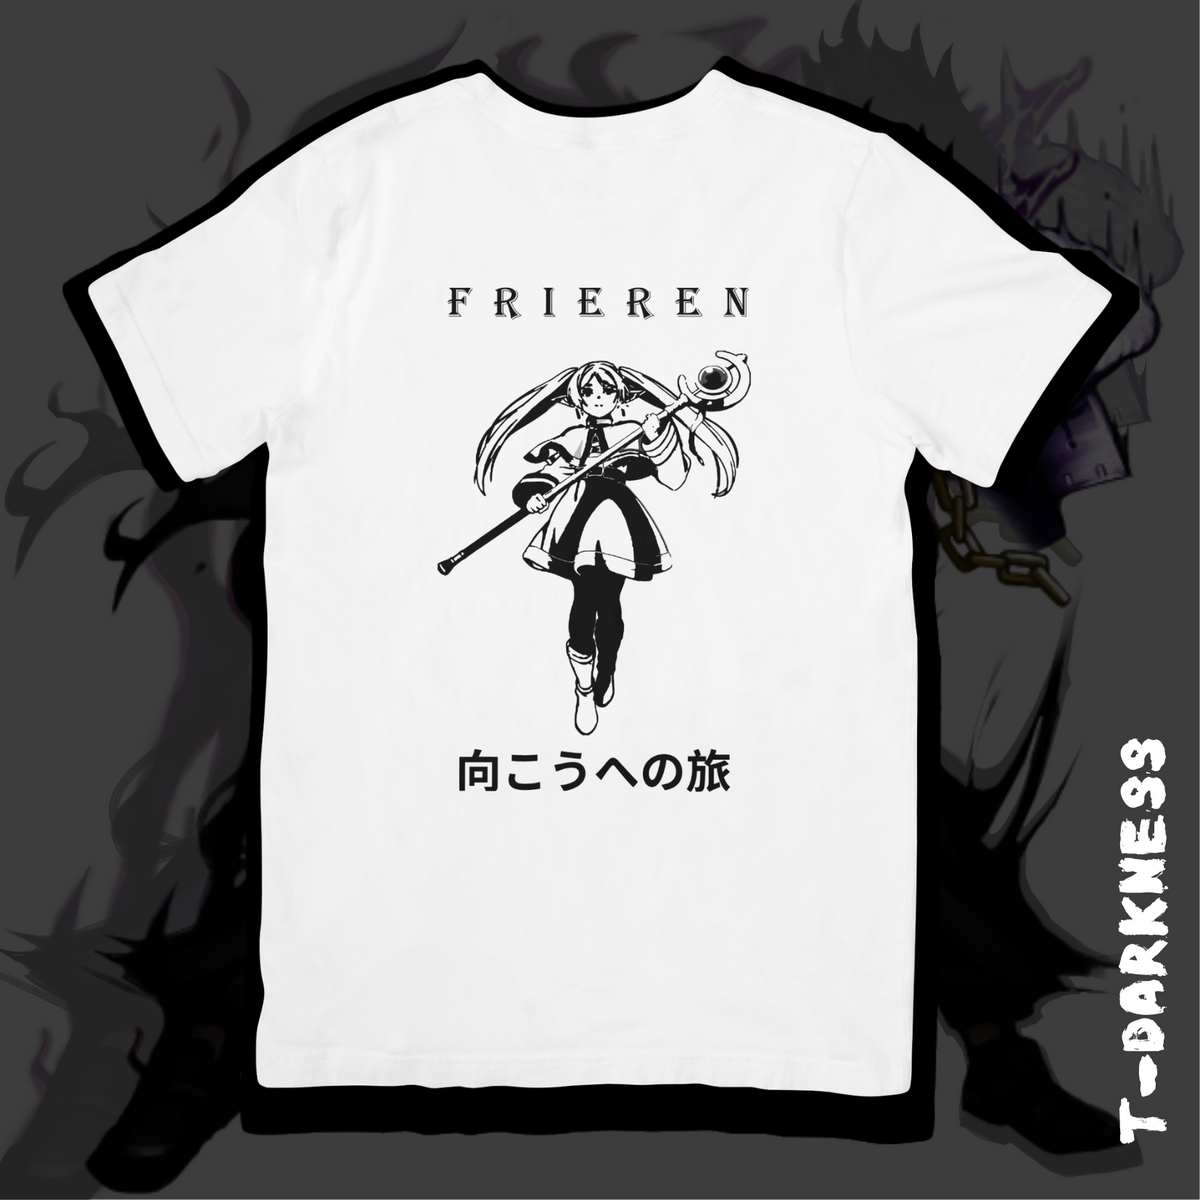 Nome do produto: Camiseta - Frieren